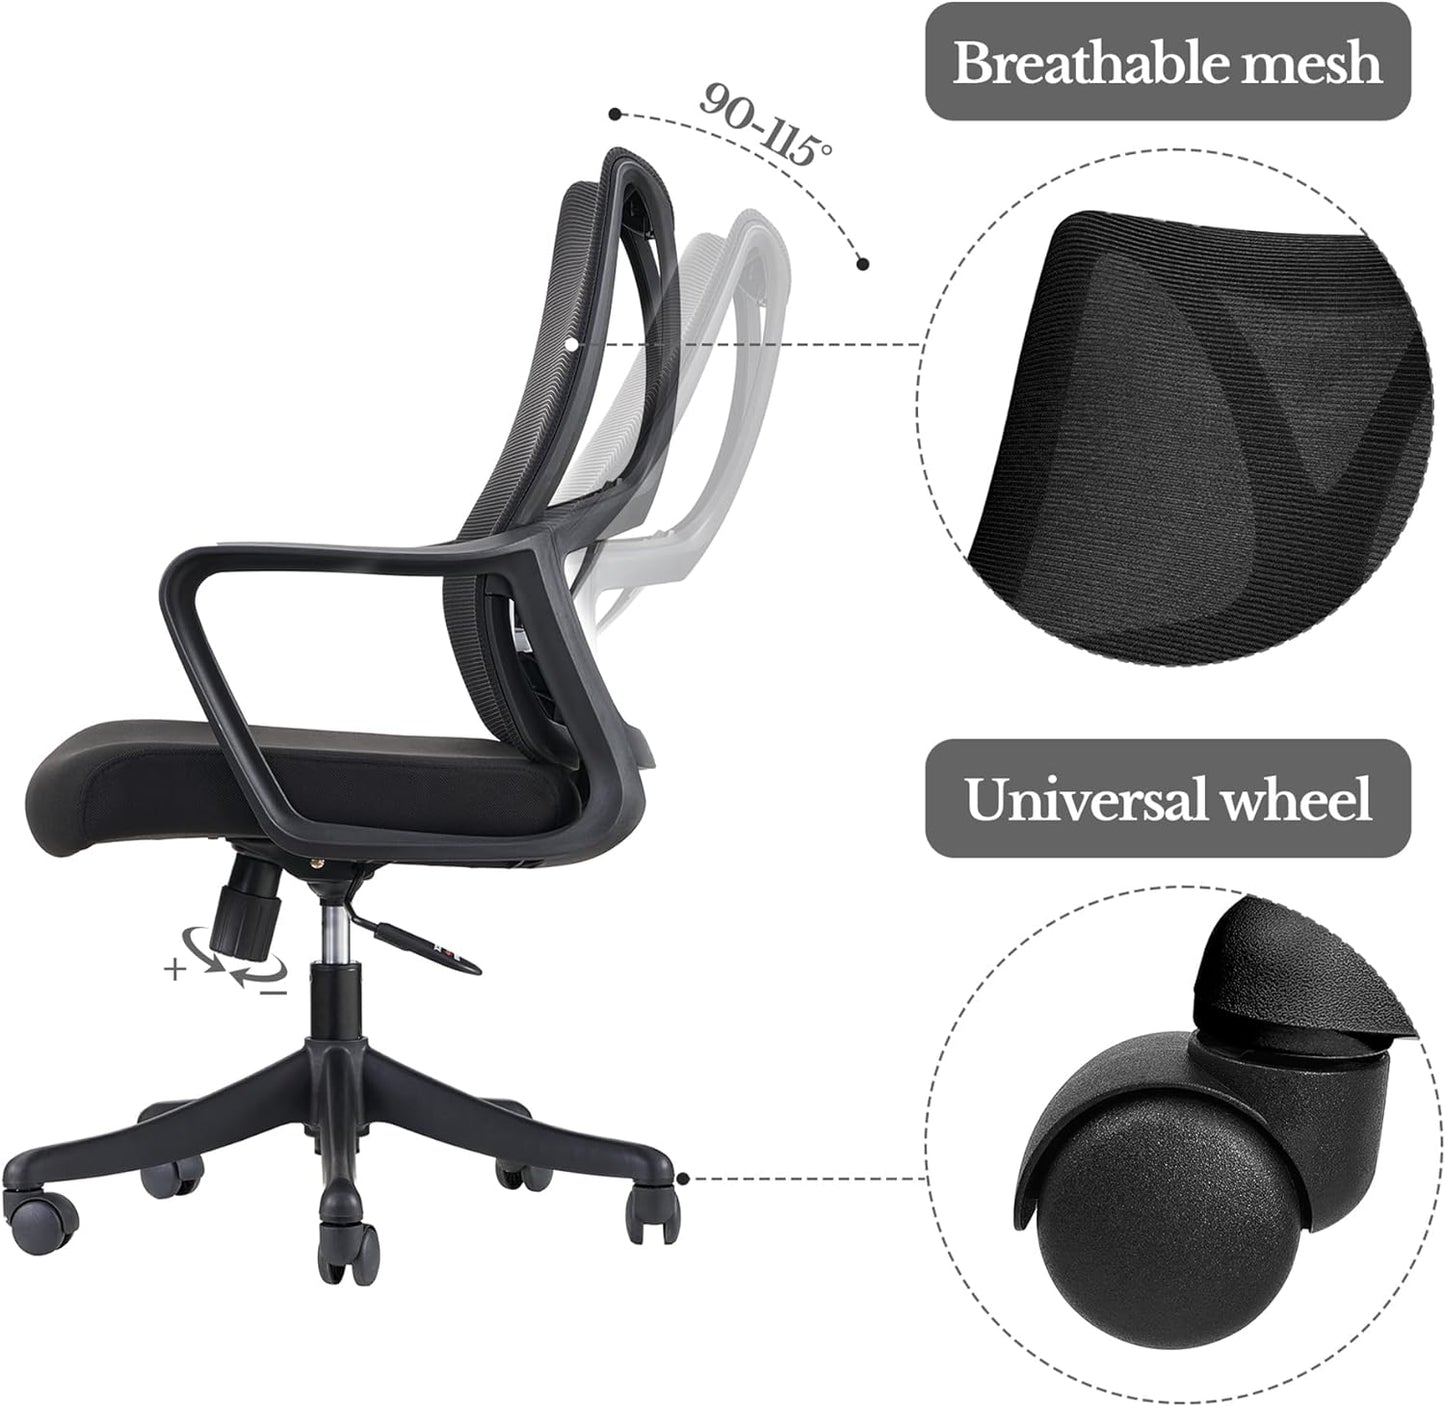 Ergonomic Office Chair 450lbs